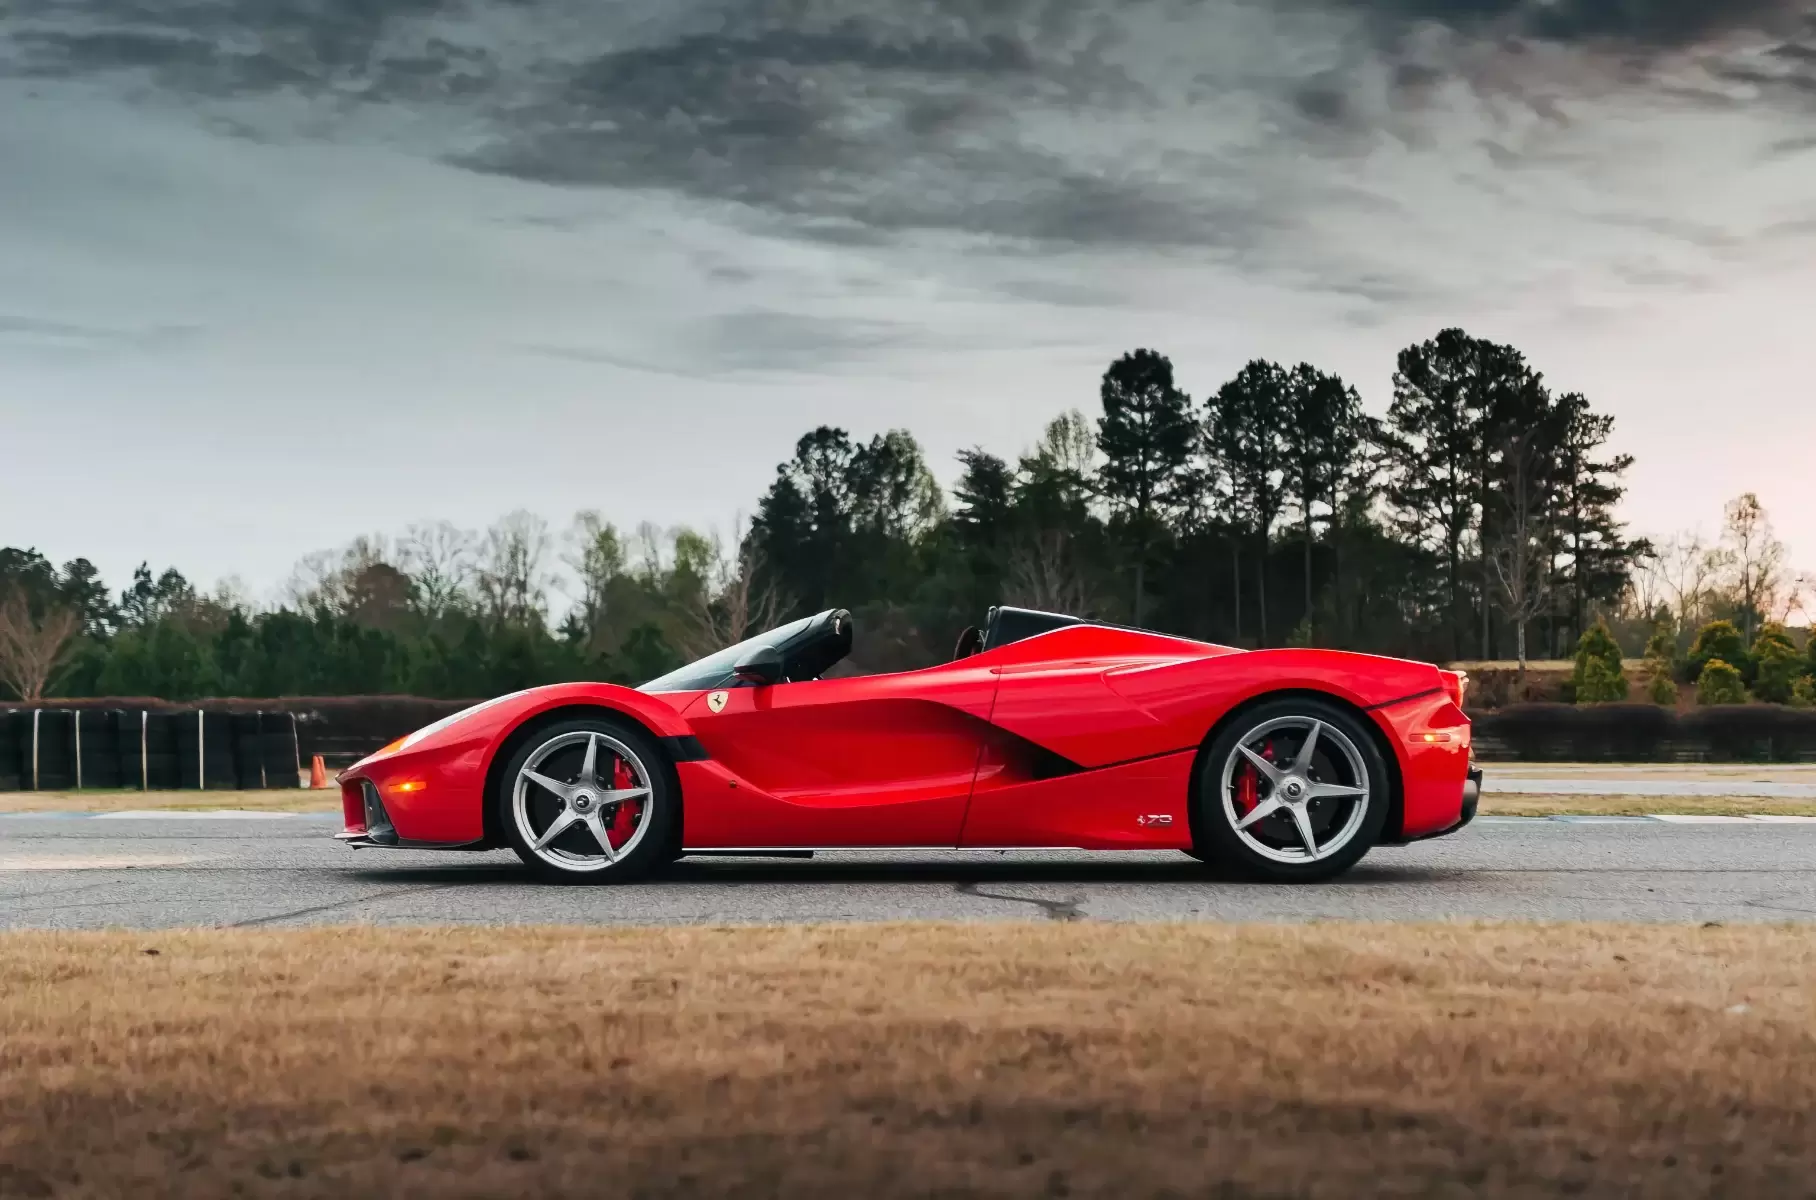 Ставка за редкий Ferrari на аукционе утроилась всего за 16 минут